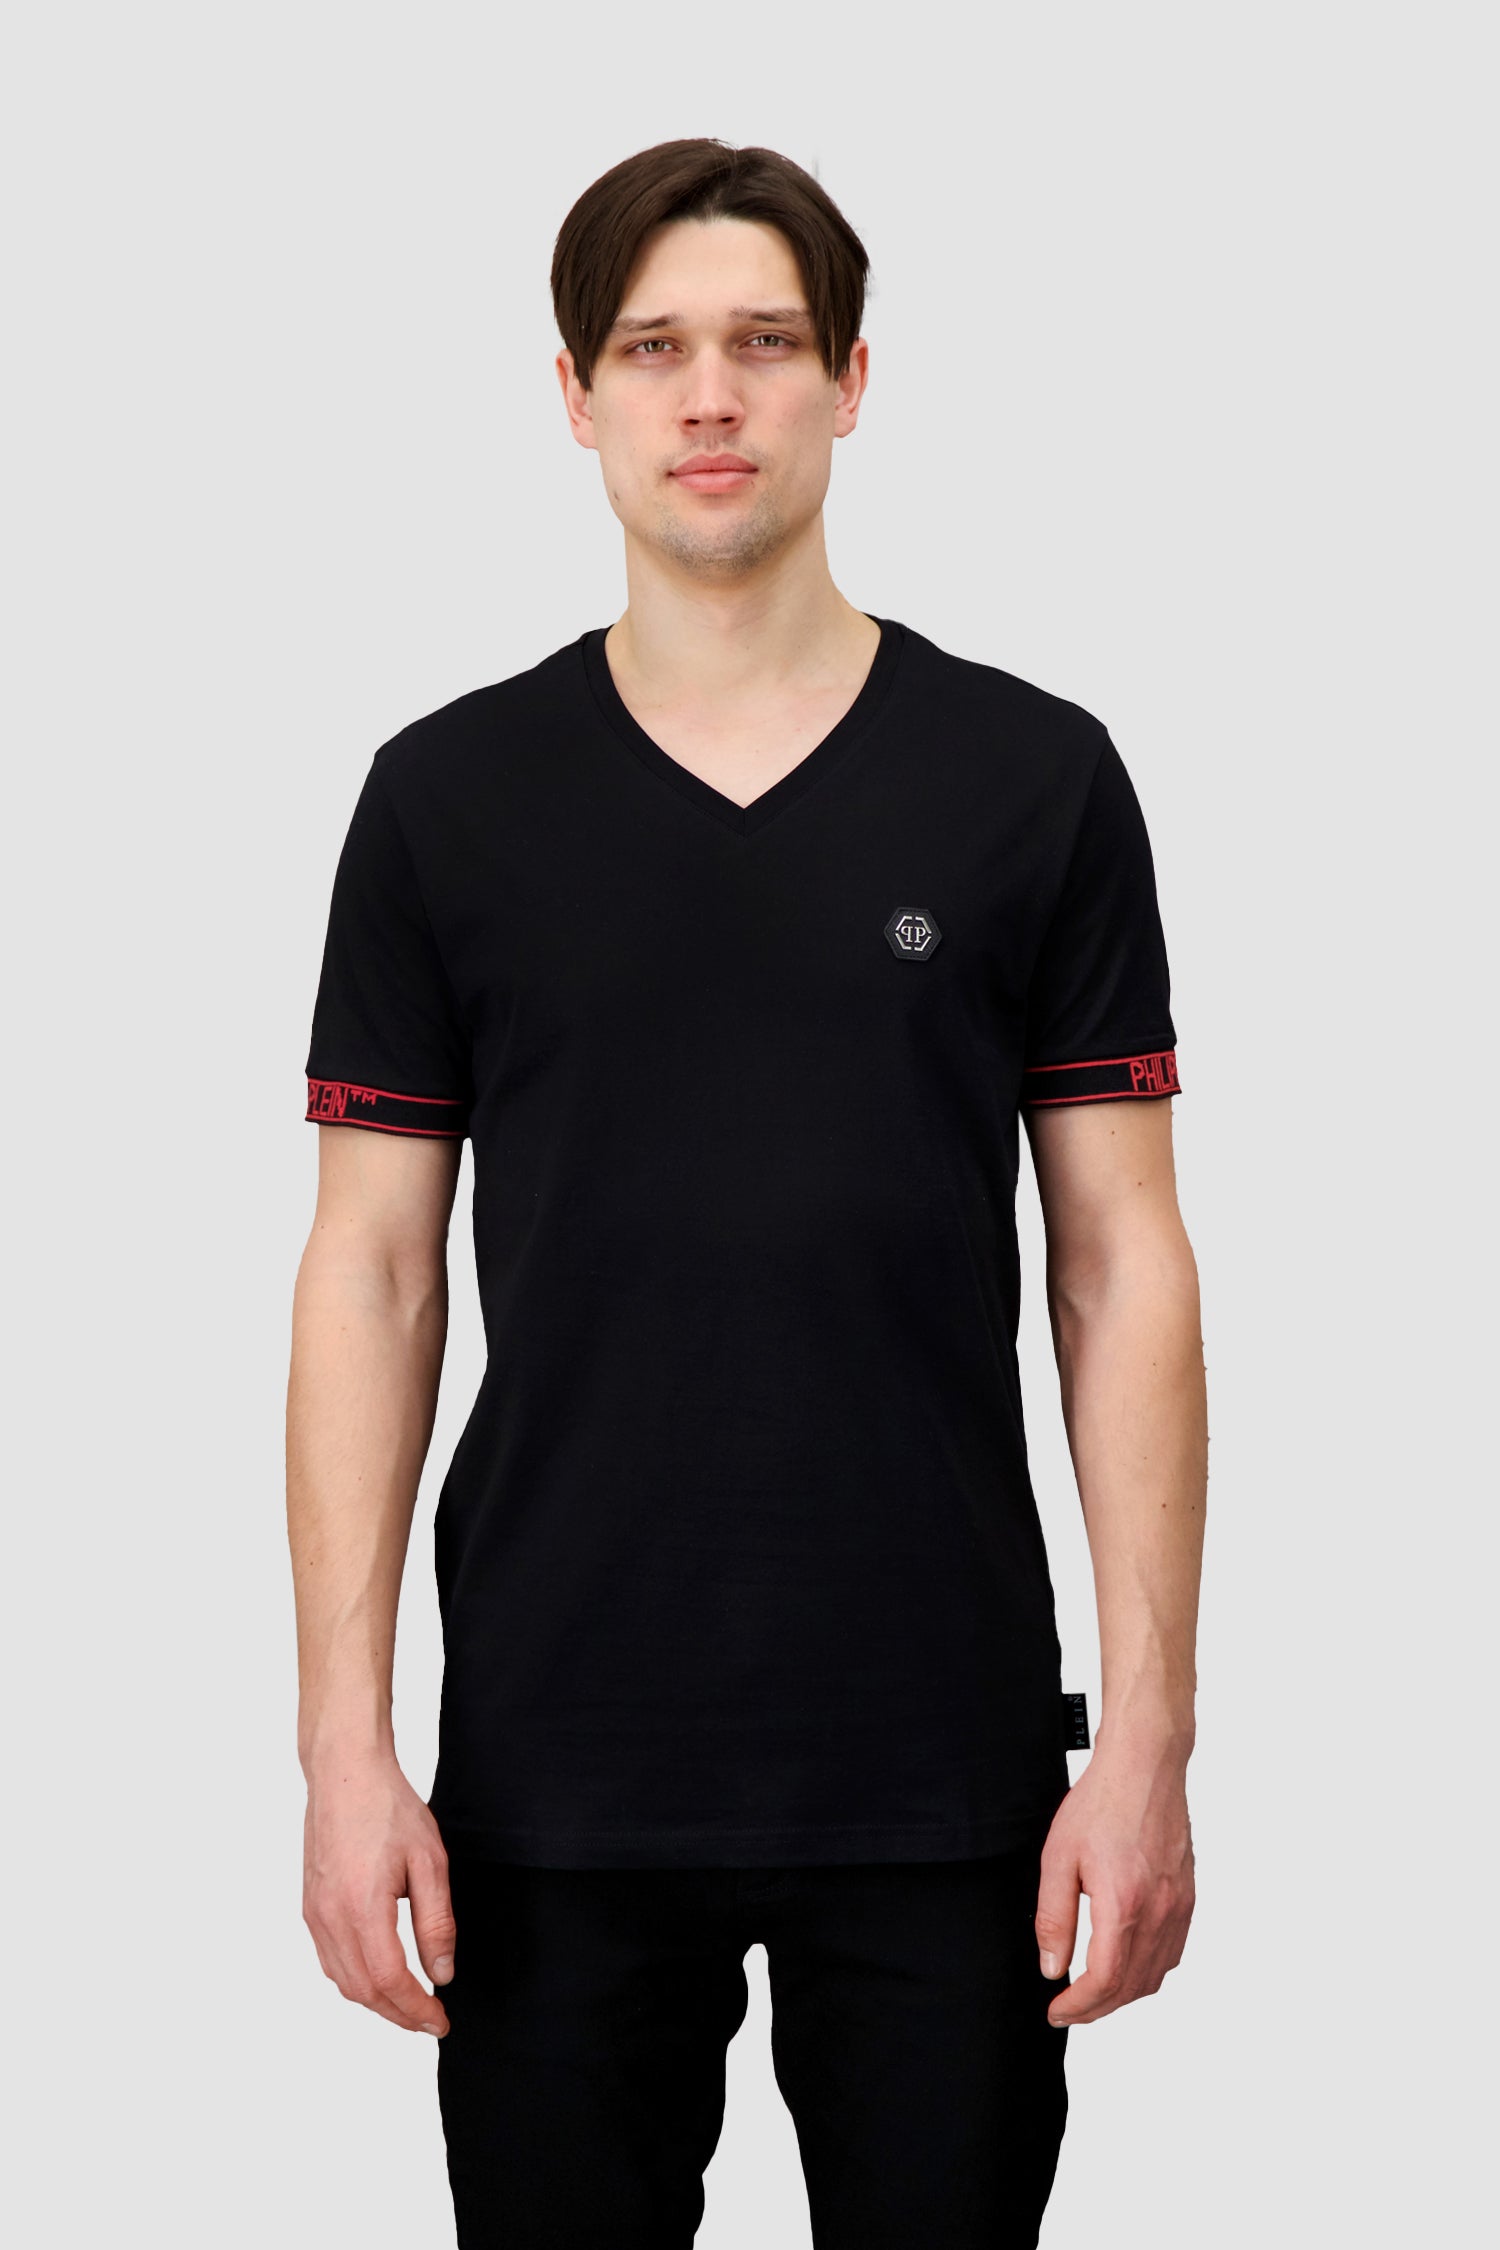 Philipp Plein Black/Red V-Neck SS - 3 T-Shirt